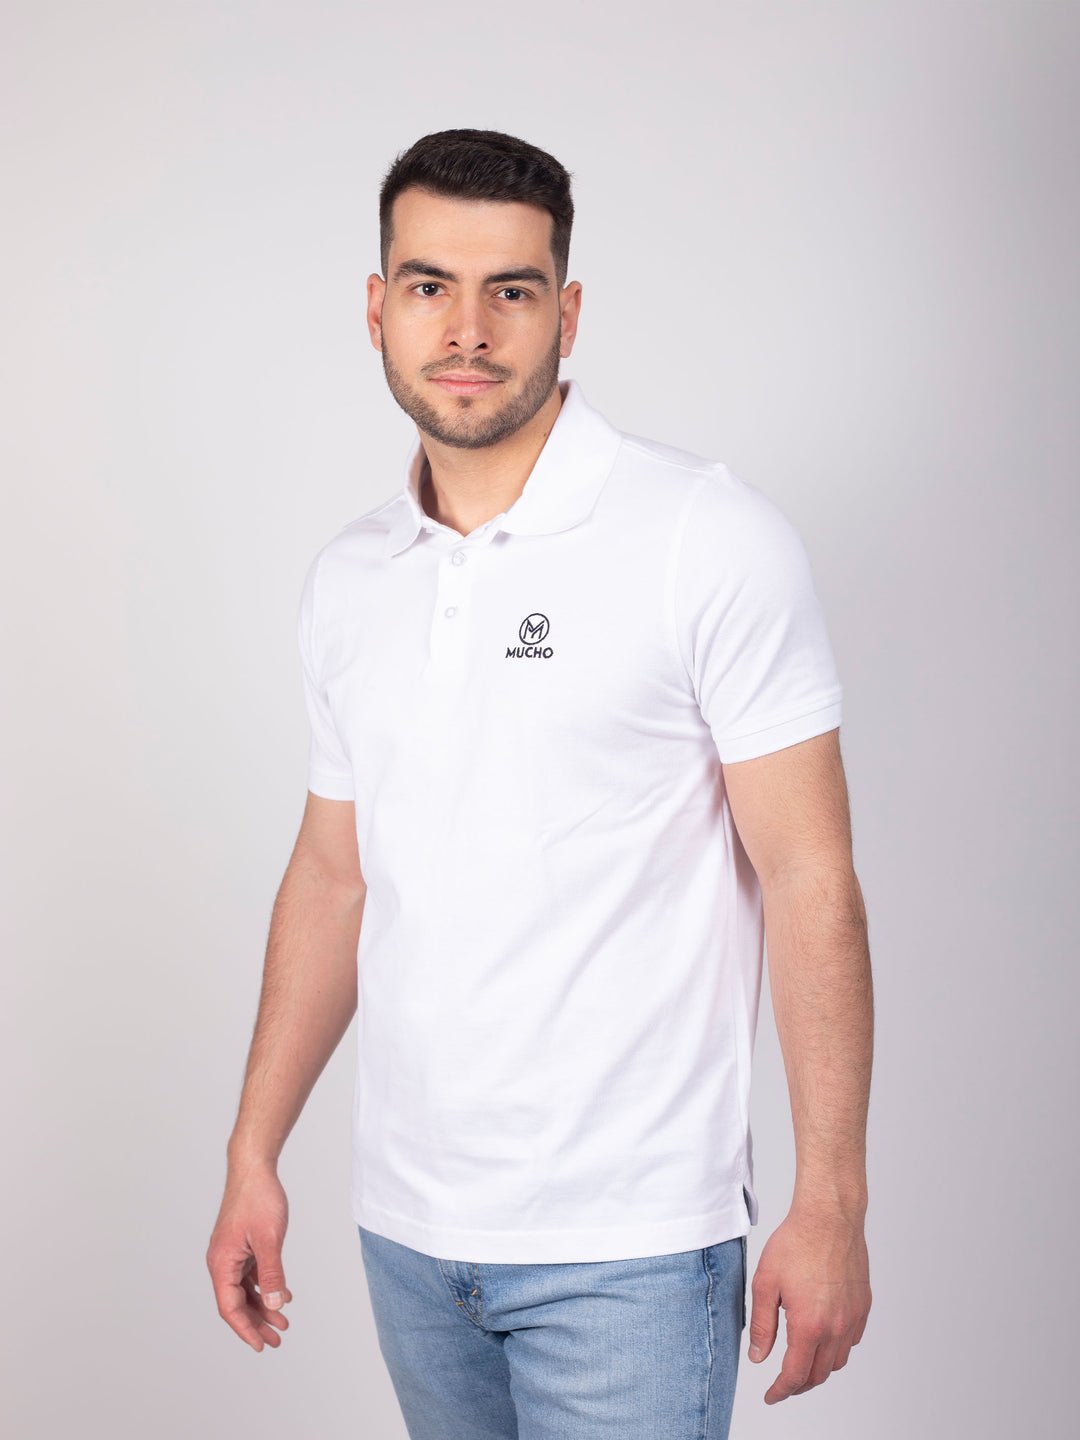 Cotton Polo Shirt - Short Sleeves